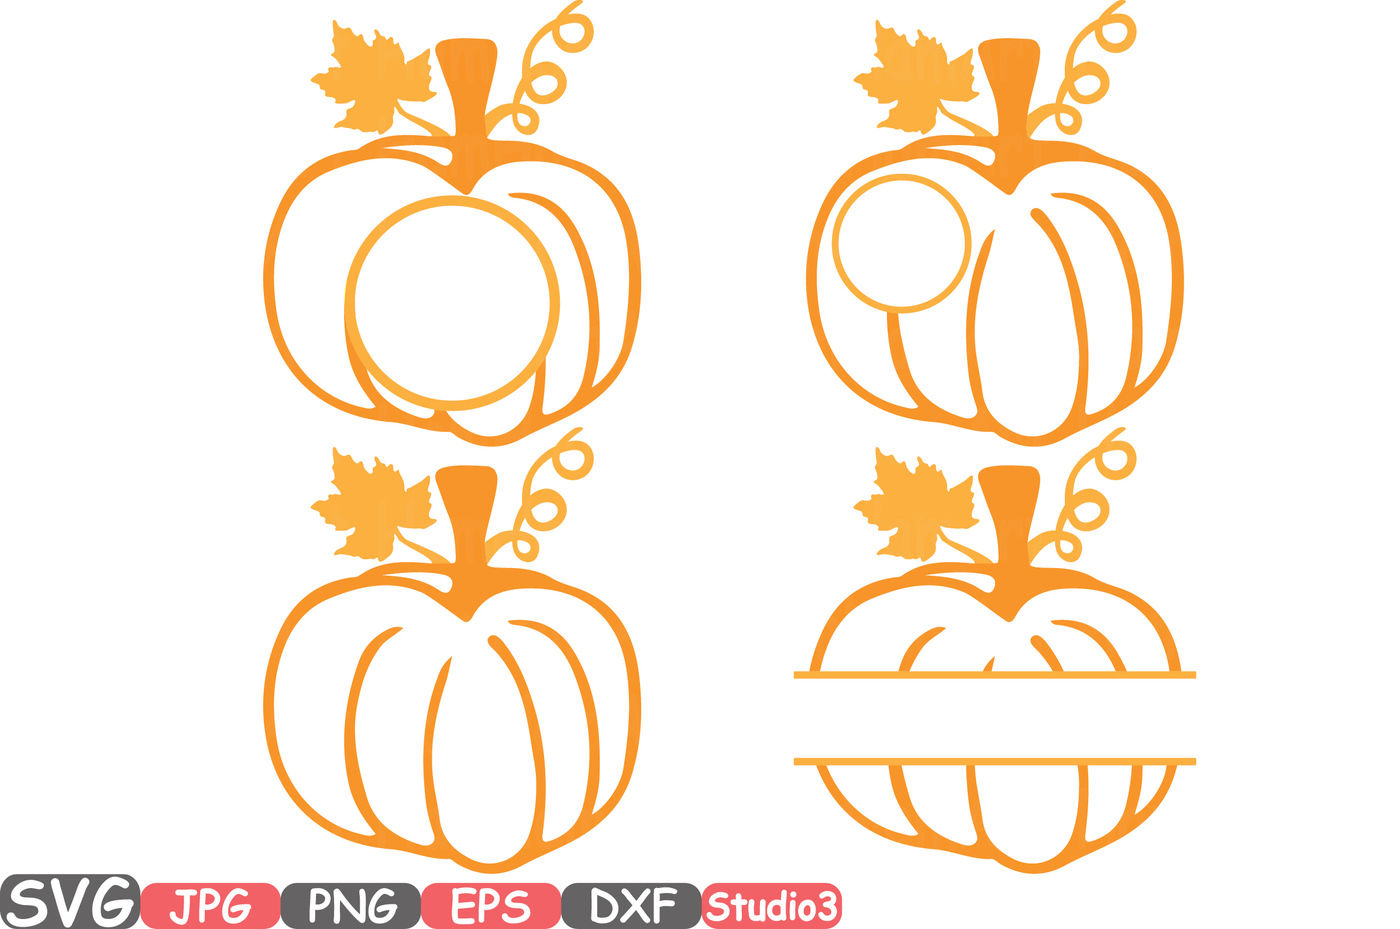 Download Pumpkin Split & Circle Monogram Silhouette SVG Cutting Files Digital Clip Art Graphic Studio3 ...